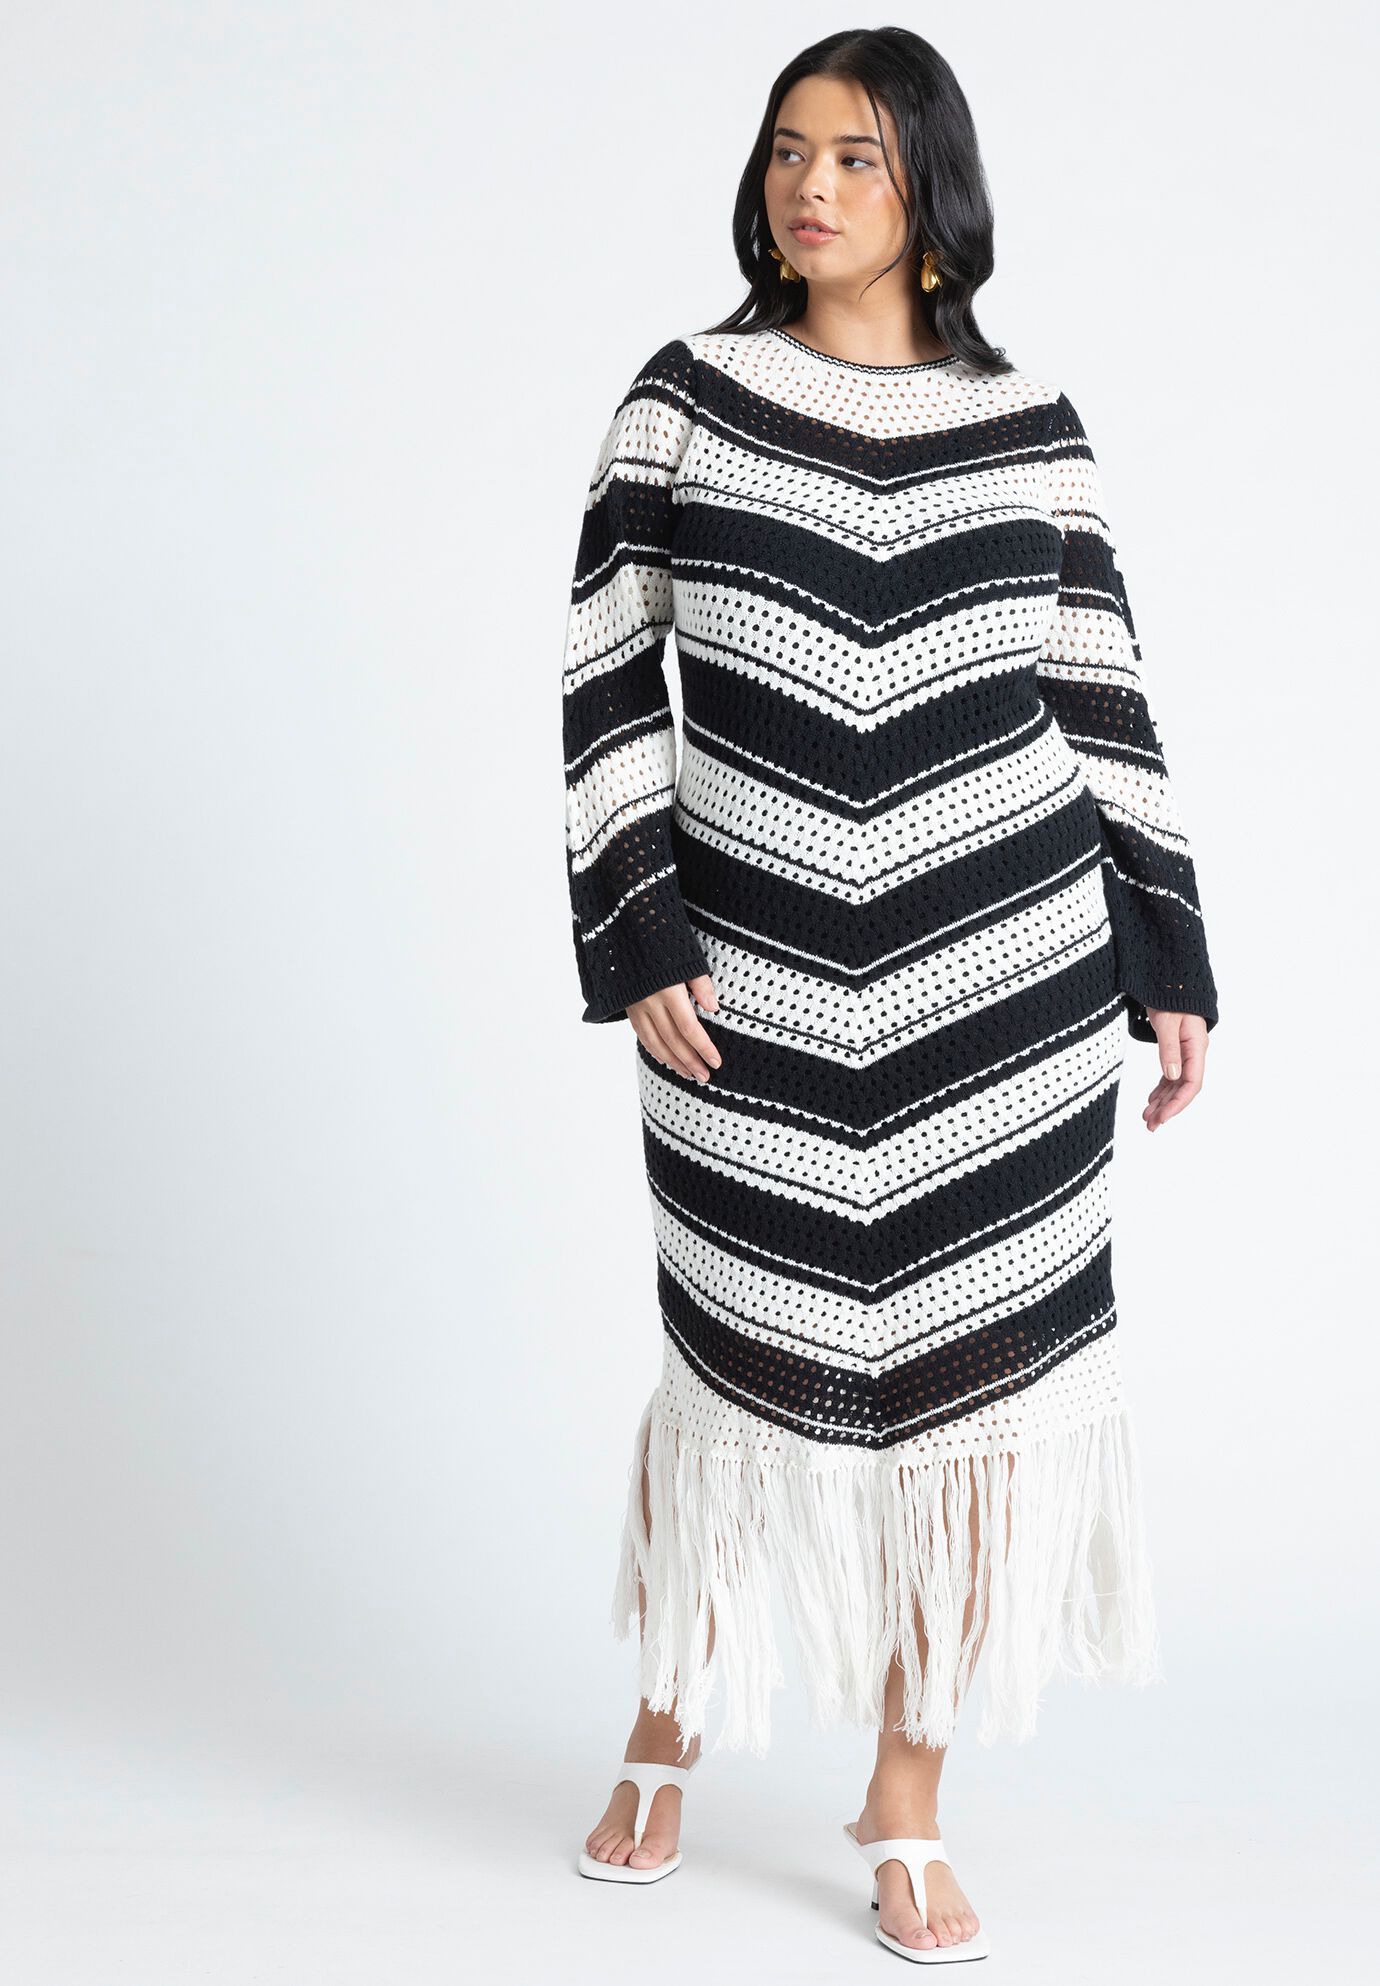 Crochet Maxi Dress With Fringe | Eloquii